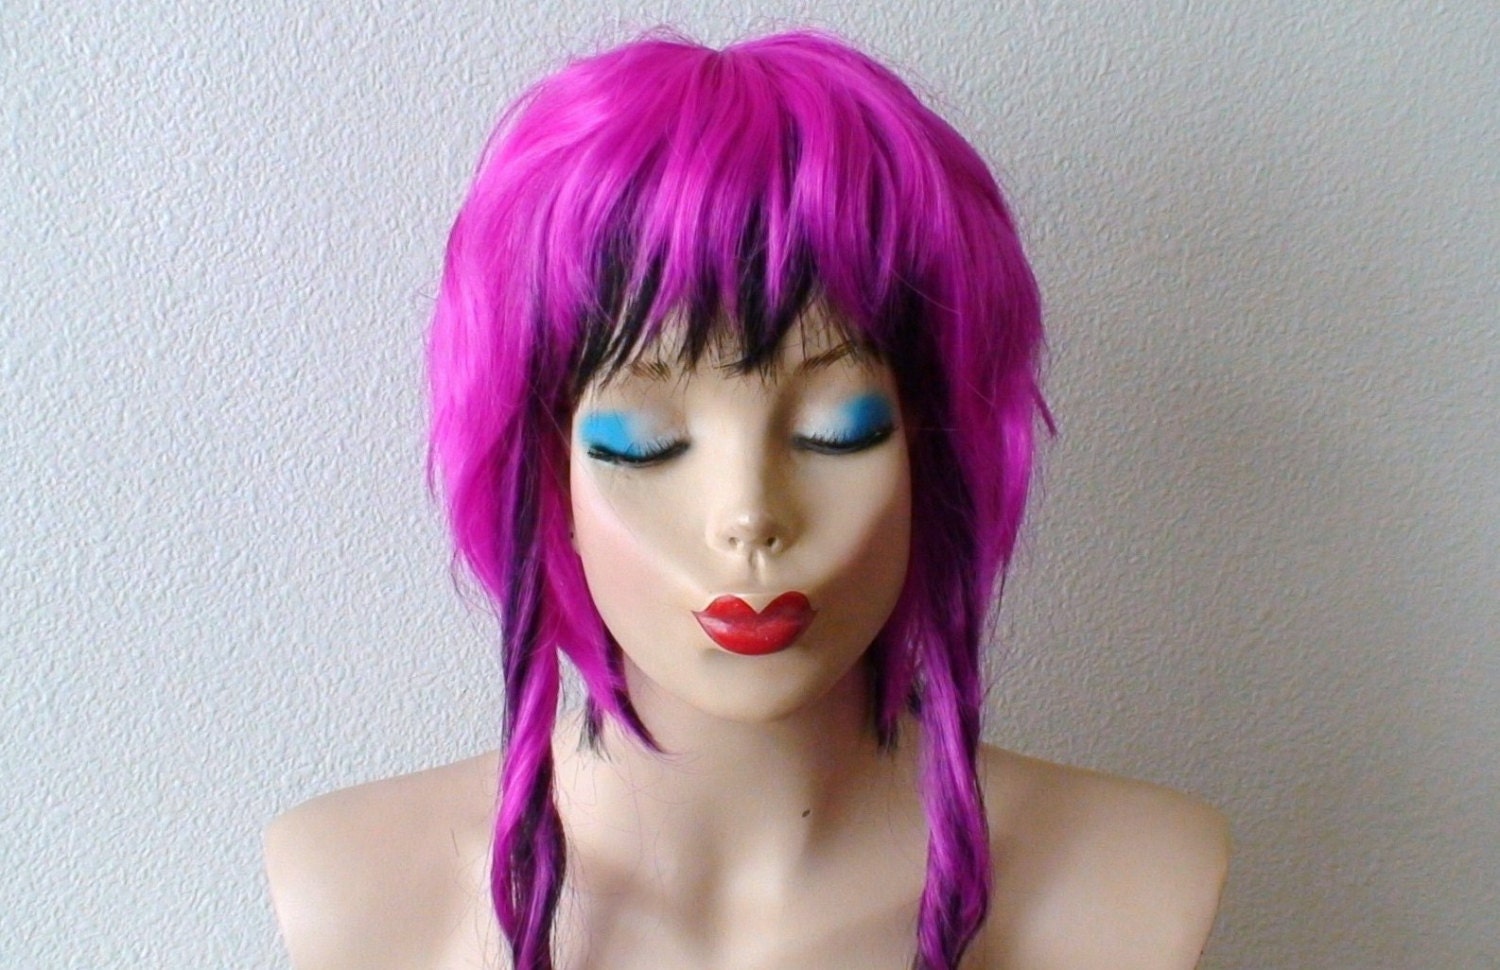 5. Ramona Flowers Blue Hair Wig - wide 8